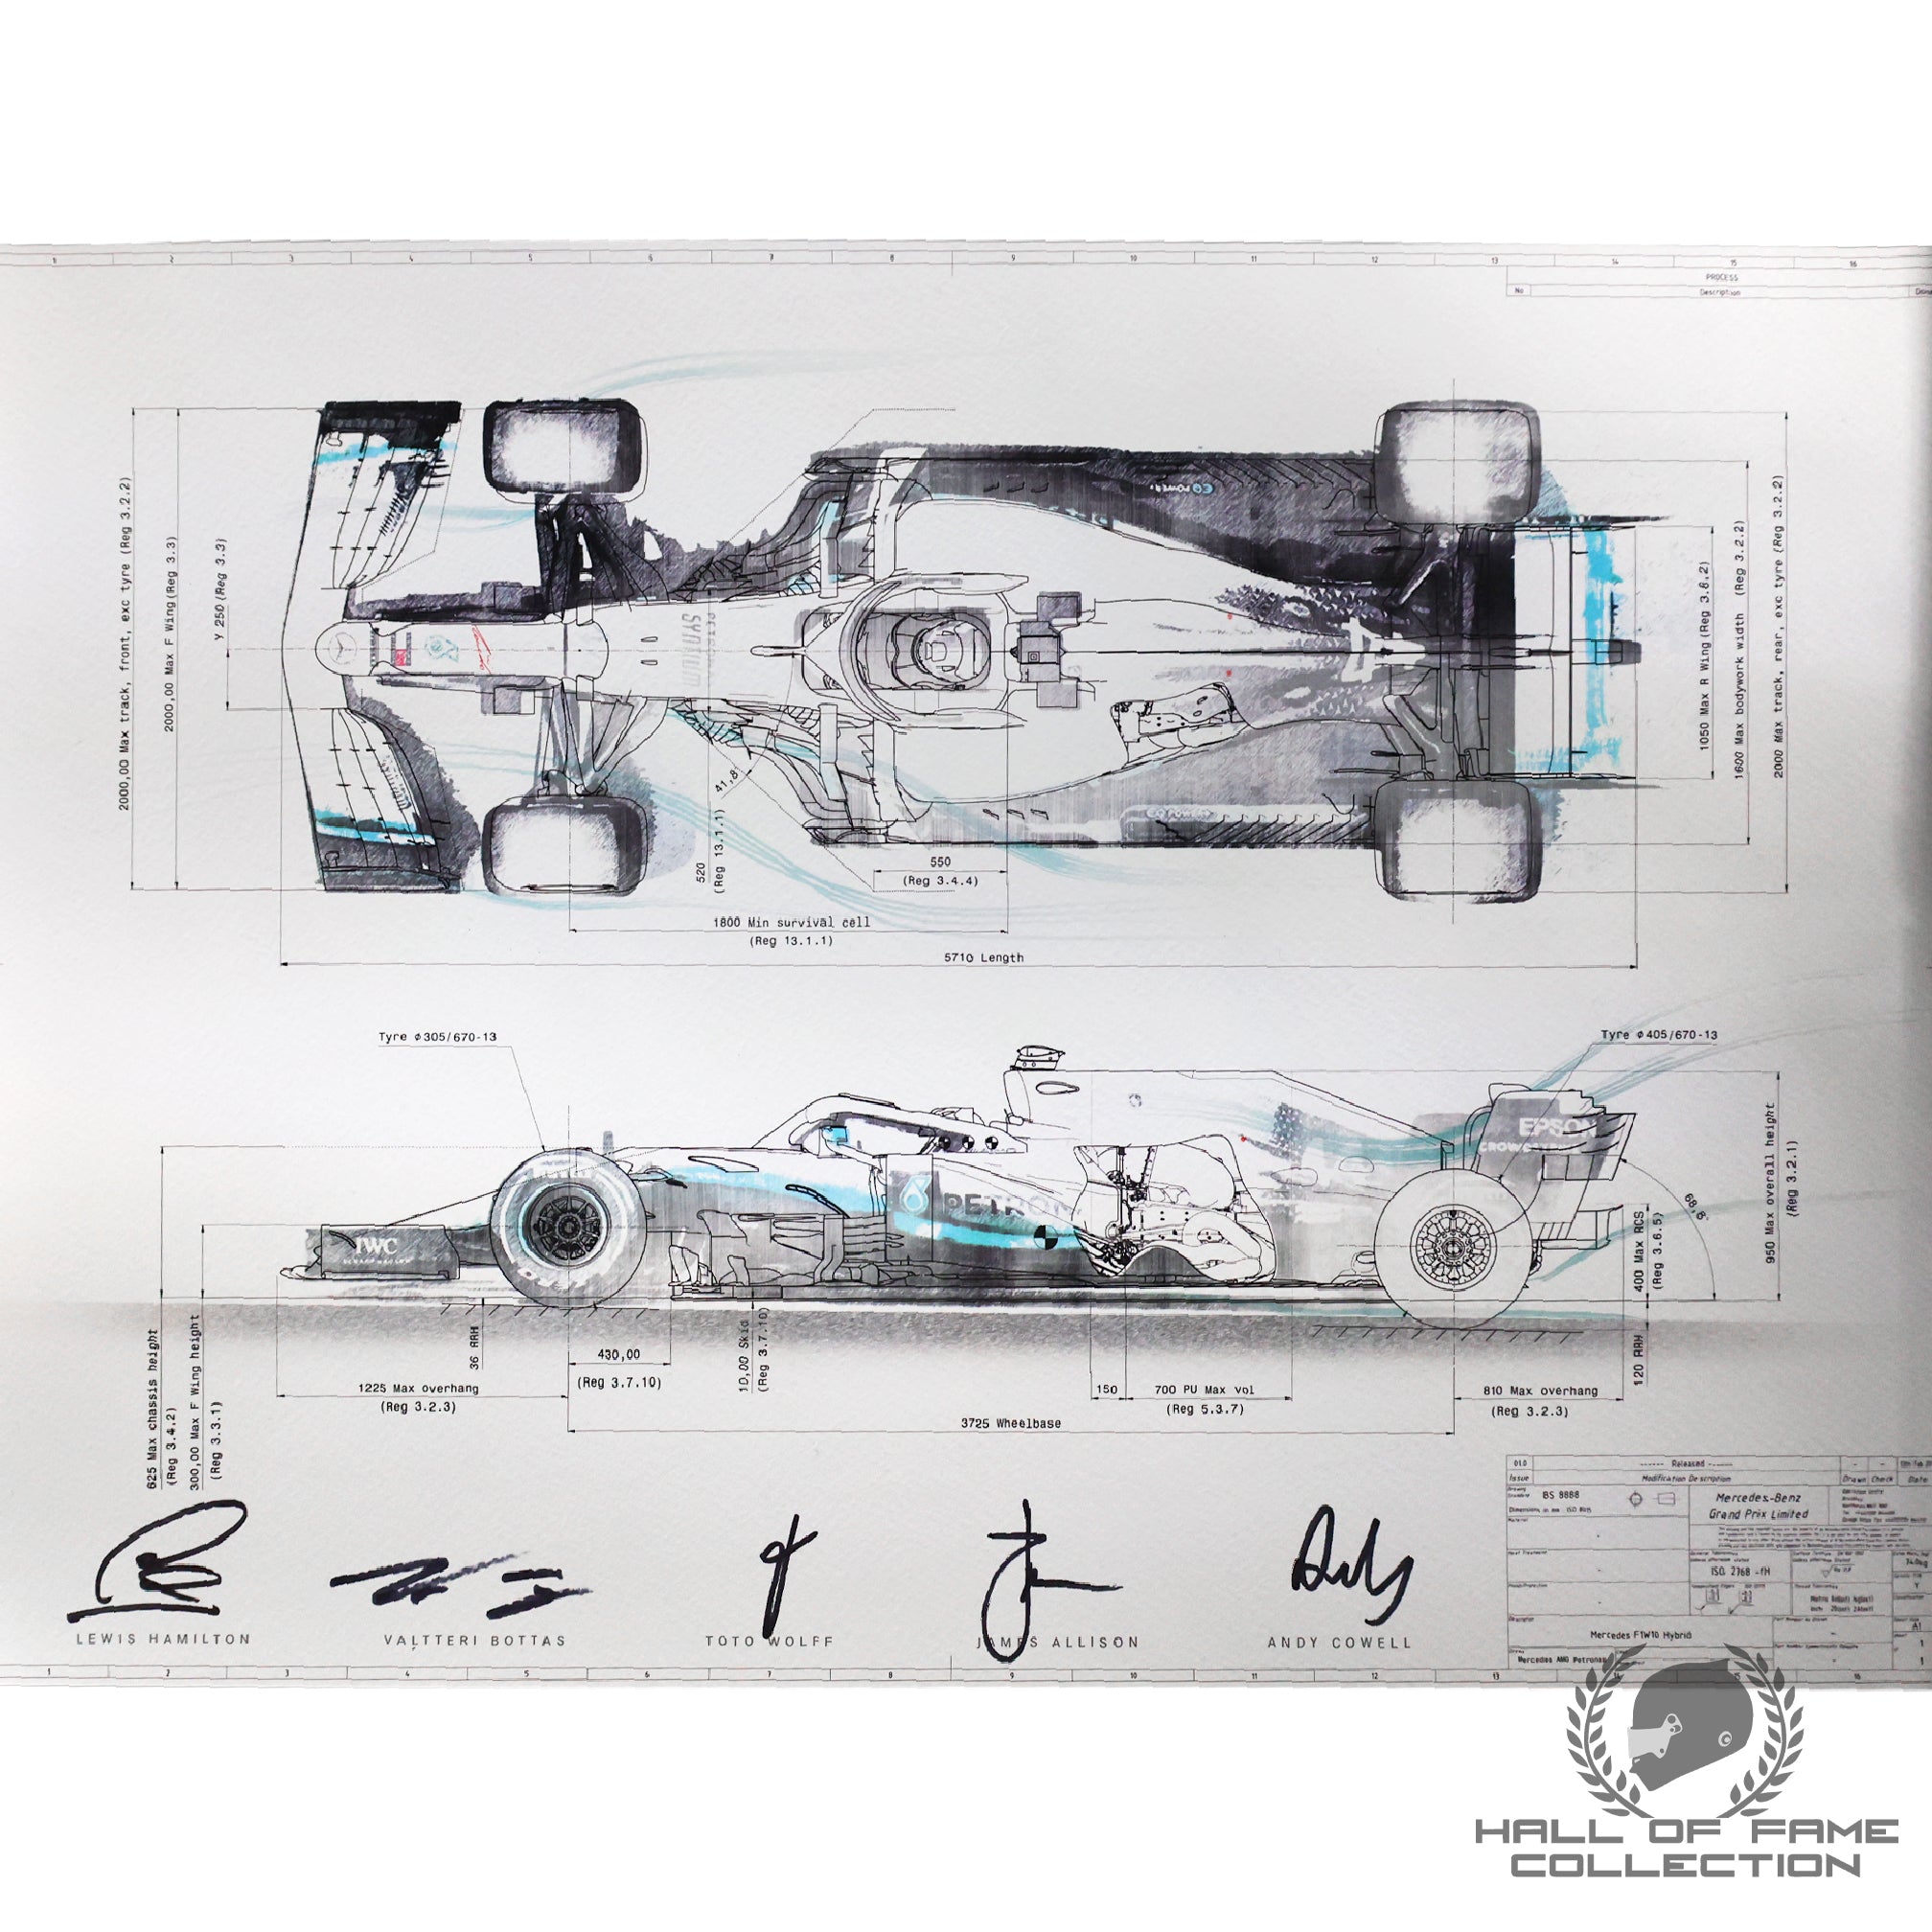 2019 Lewis Hamilton Valtteri Bottas Toto Wolff James Allison Andy Cowell Signed Mercedes W10 F1 Print